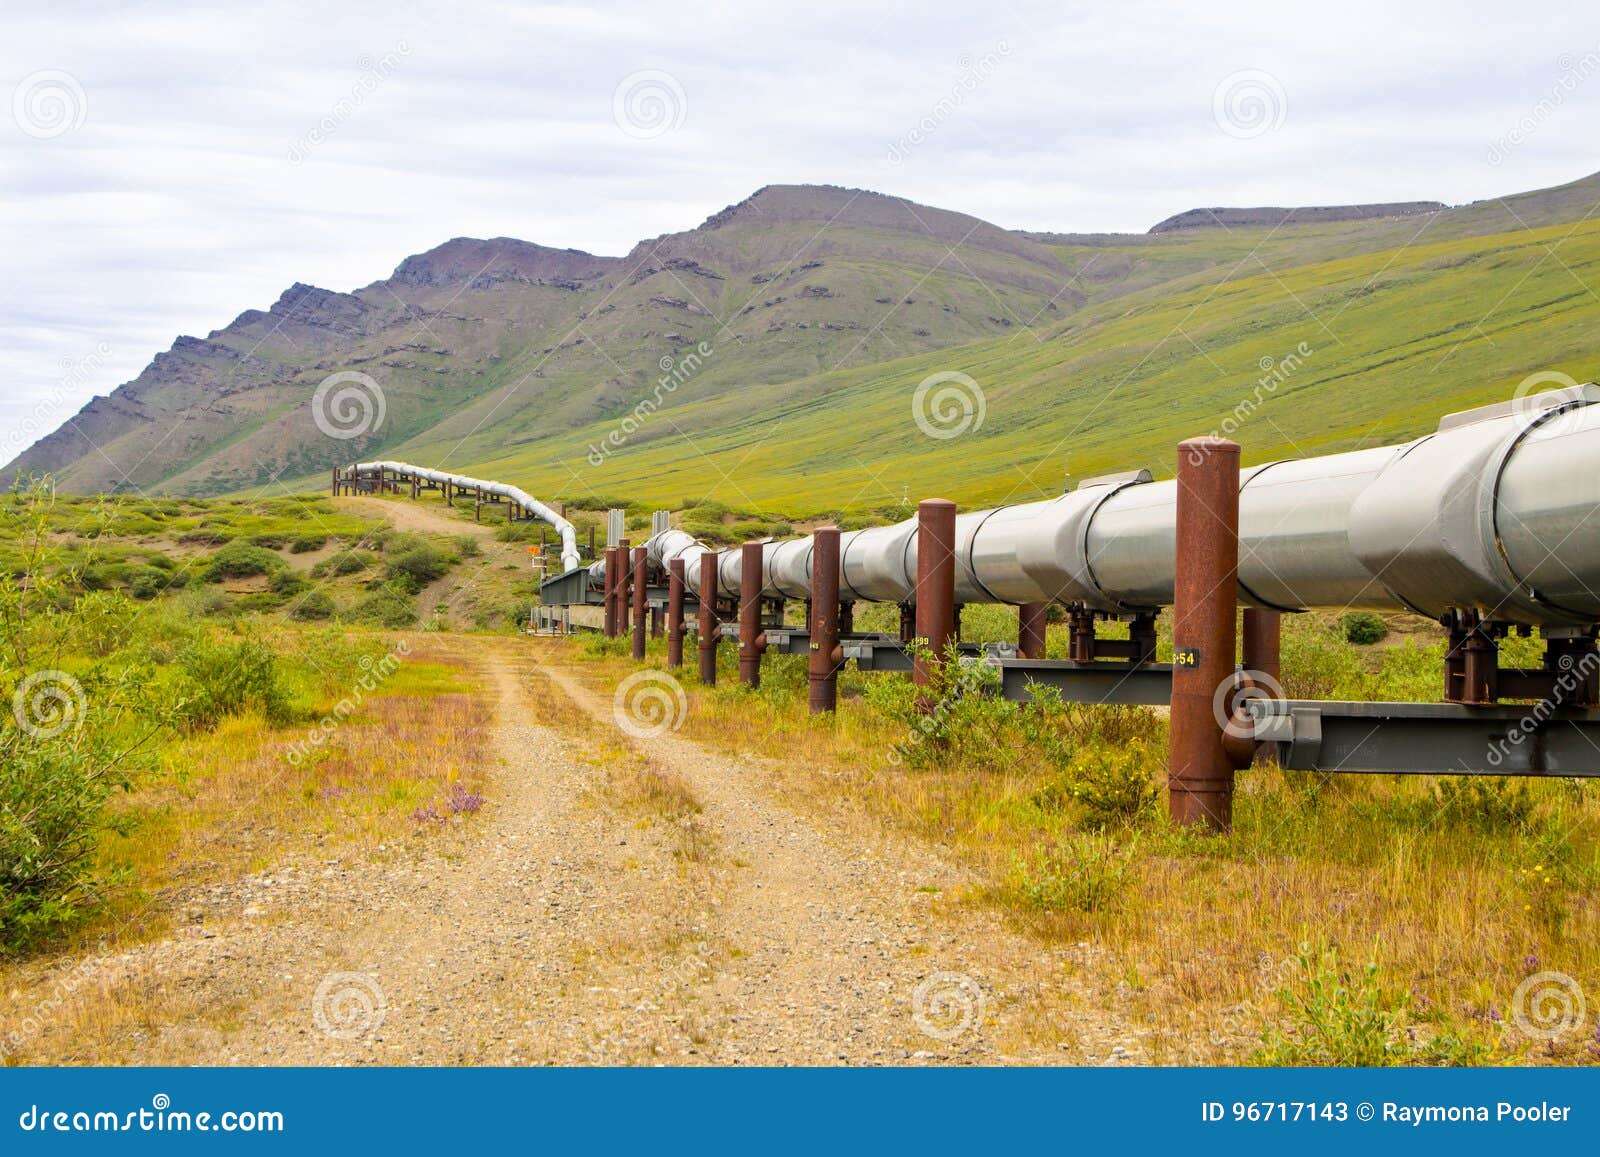 wild alaska pipeline